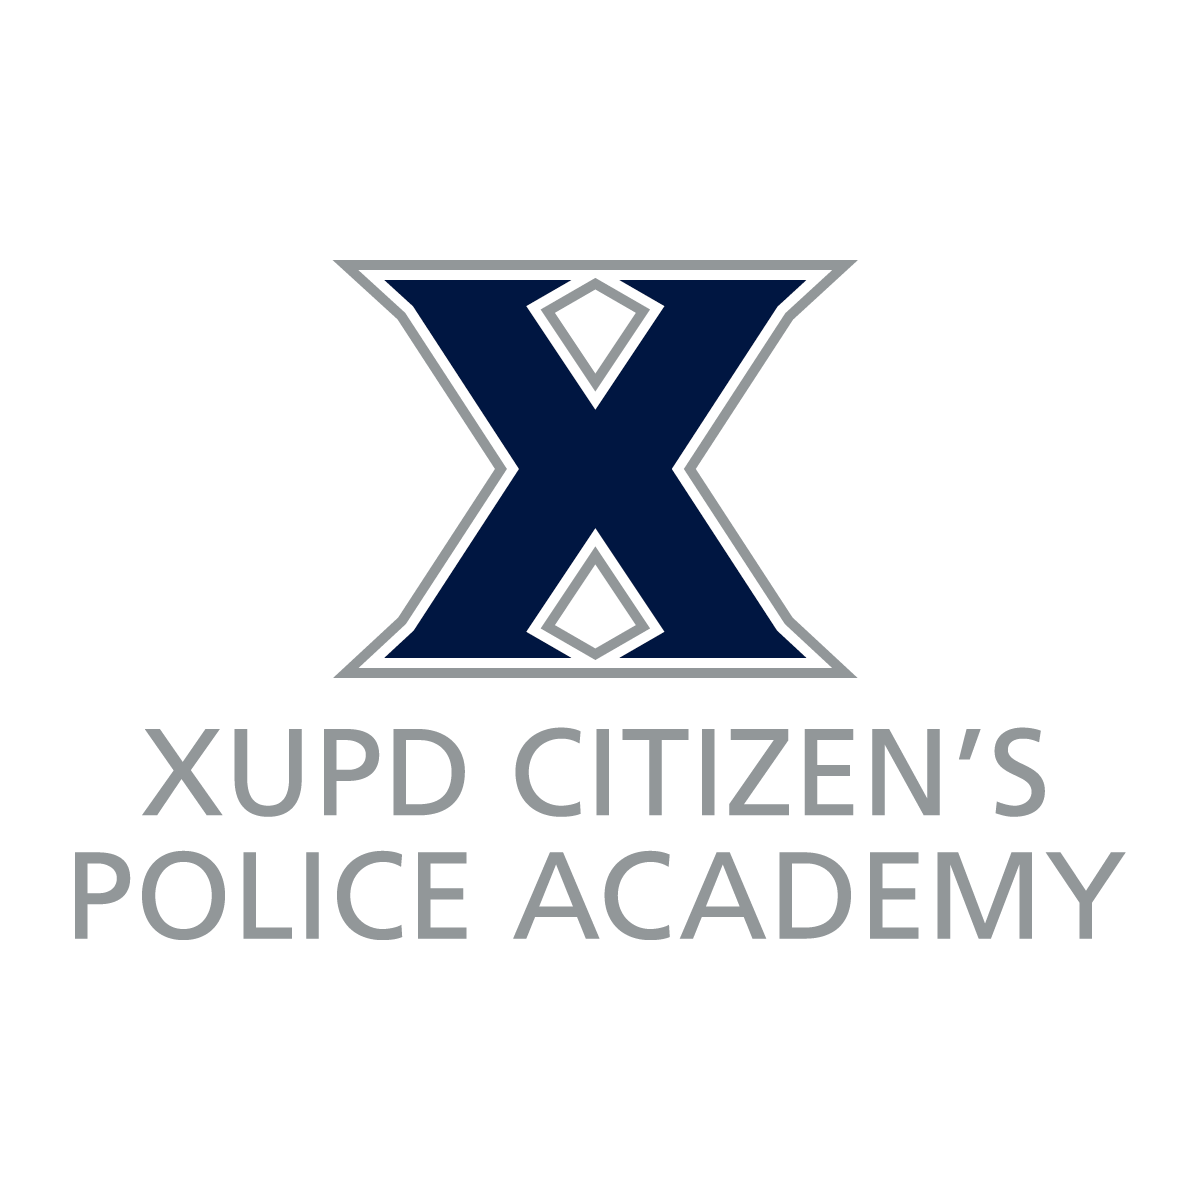 XUPD Citizen's Police Academy logo